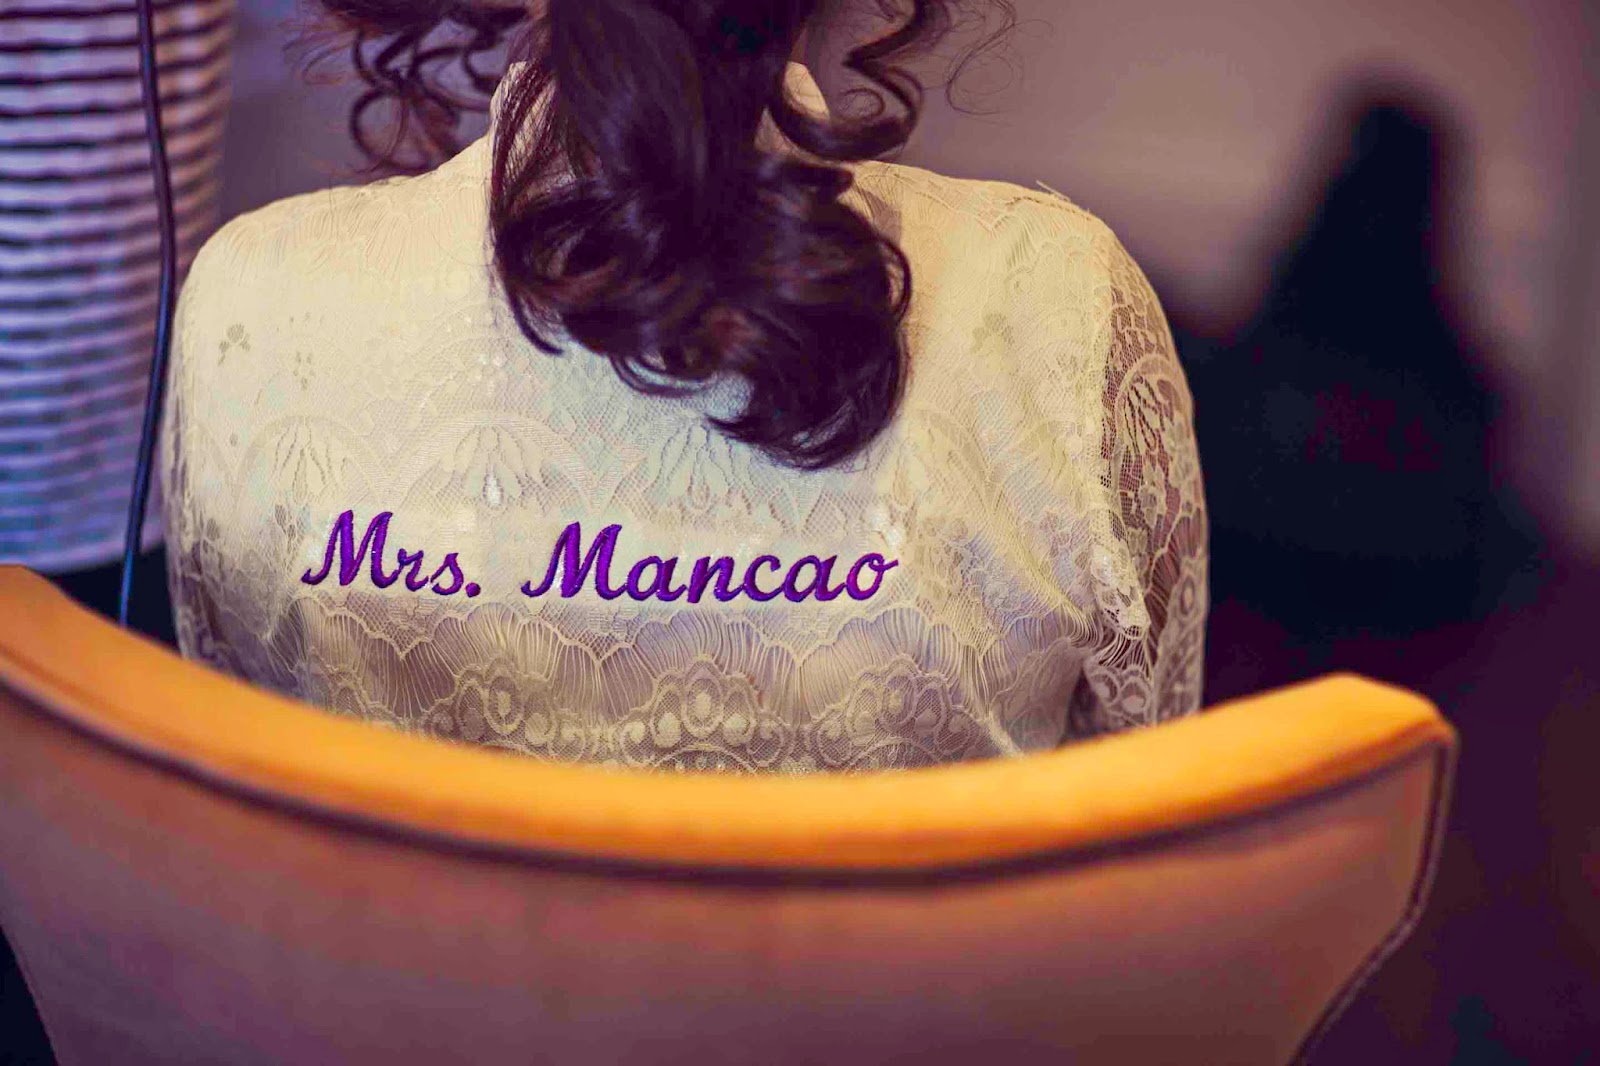 Soon to be Mrs. Mancao